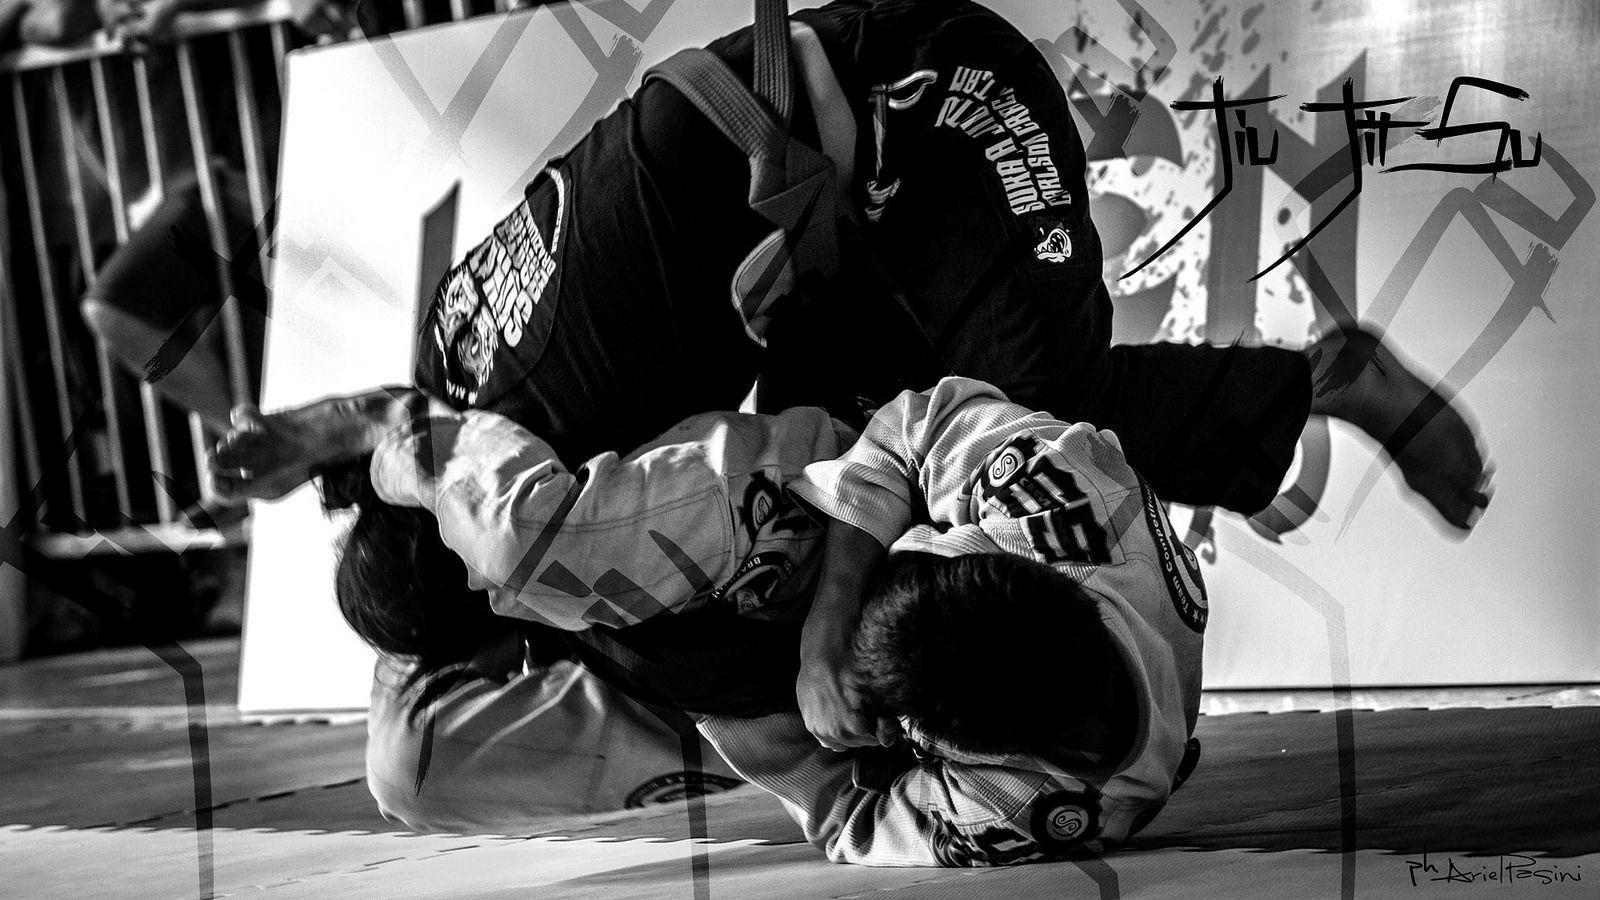 Judo Gi Wallpaper